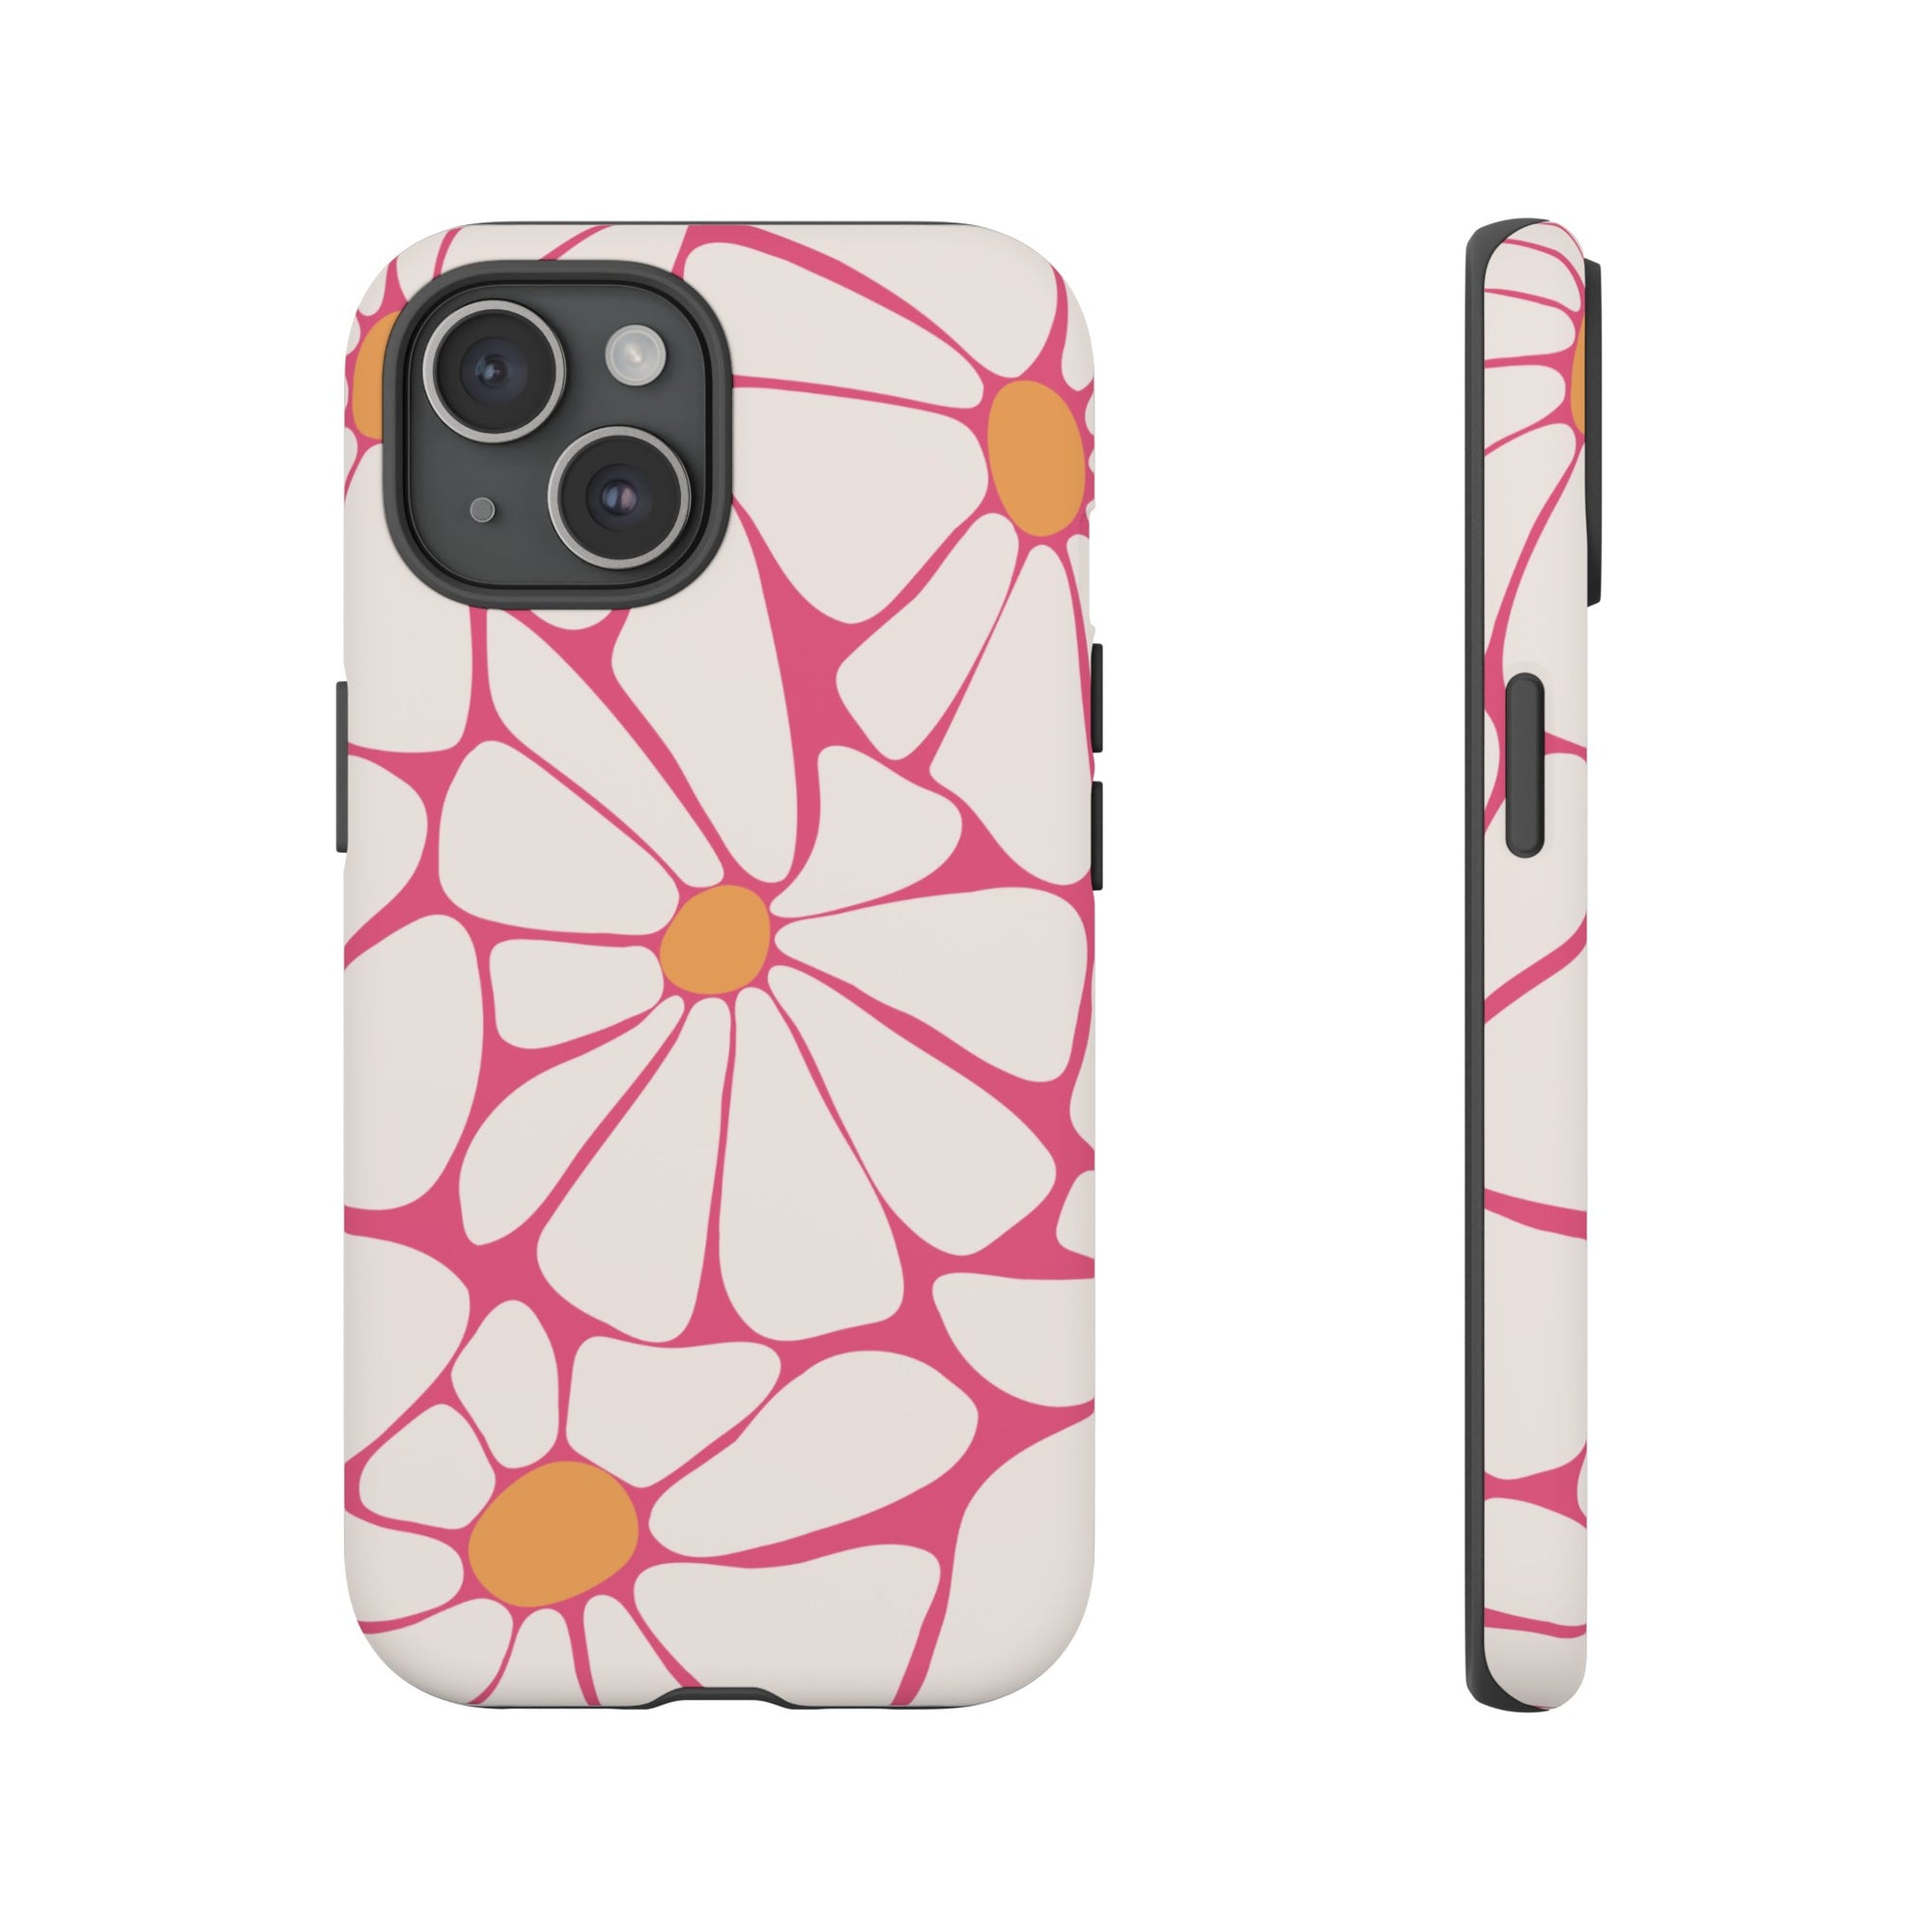 Retro Flowers Pink iPhone Case